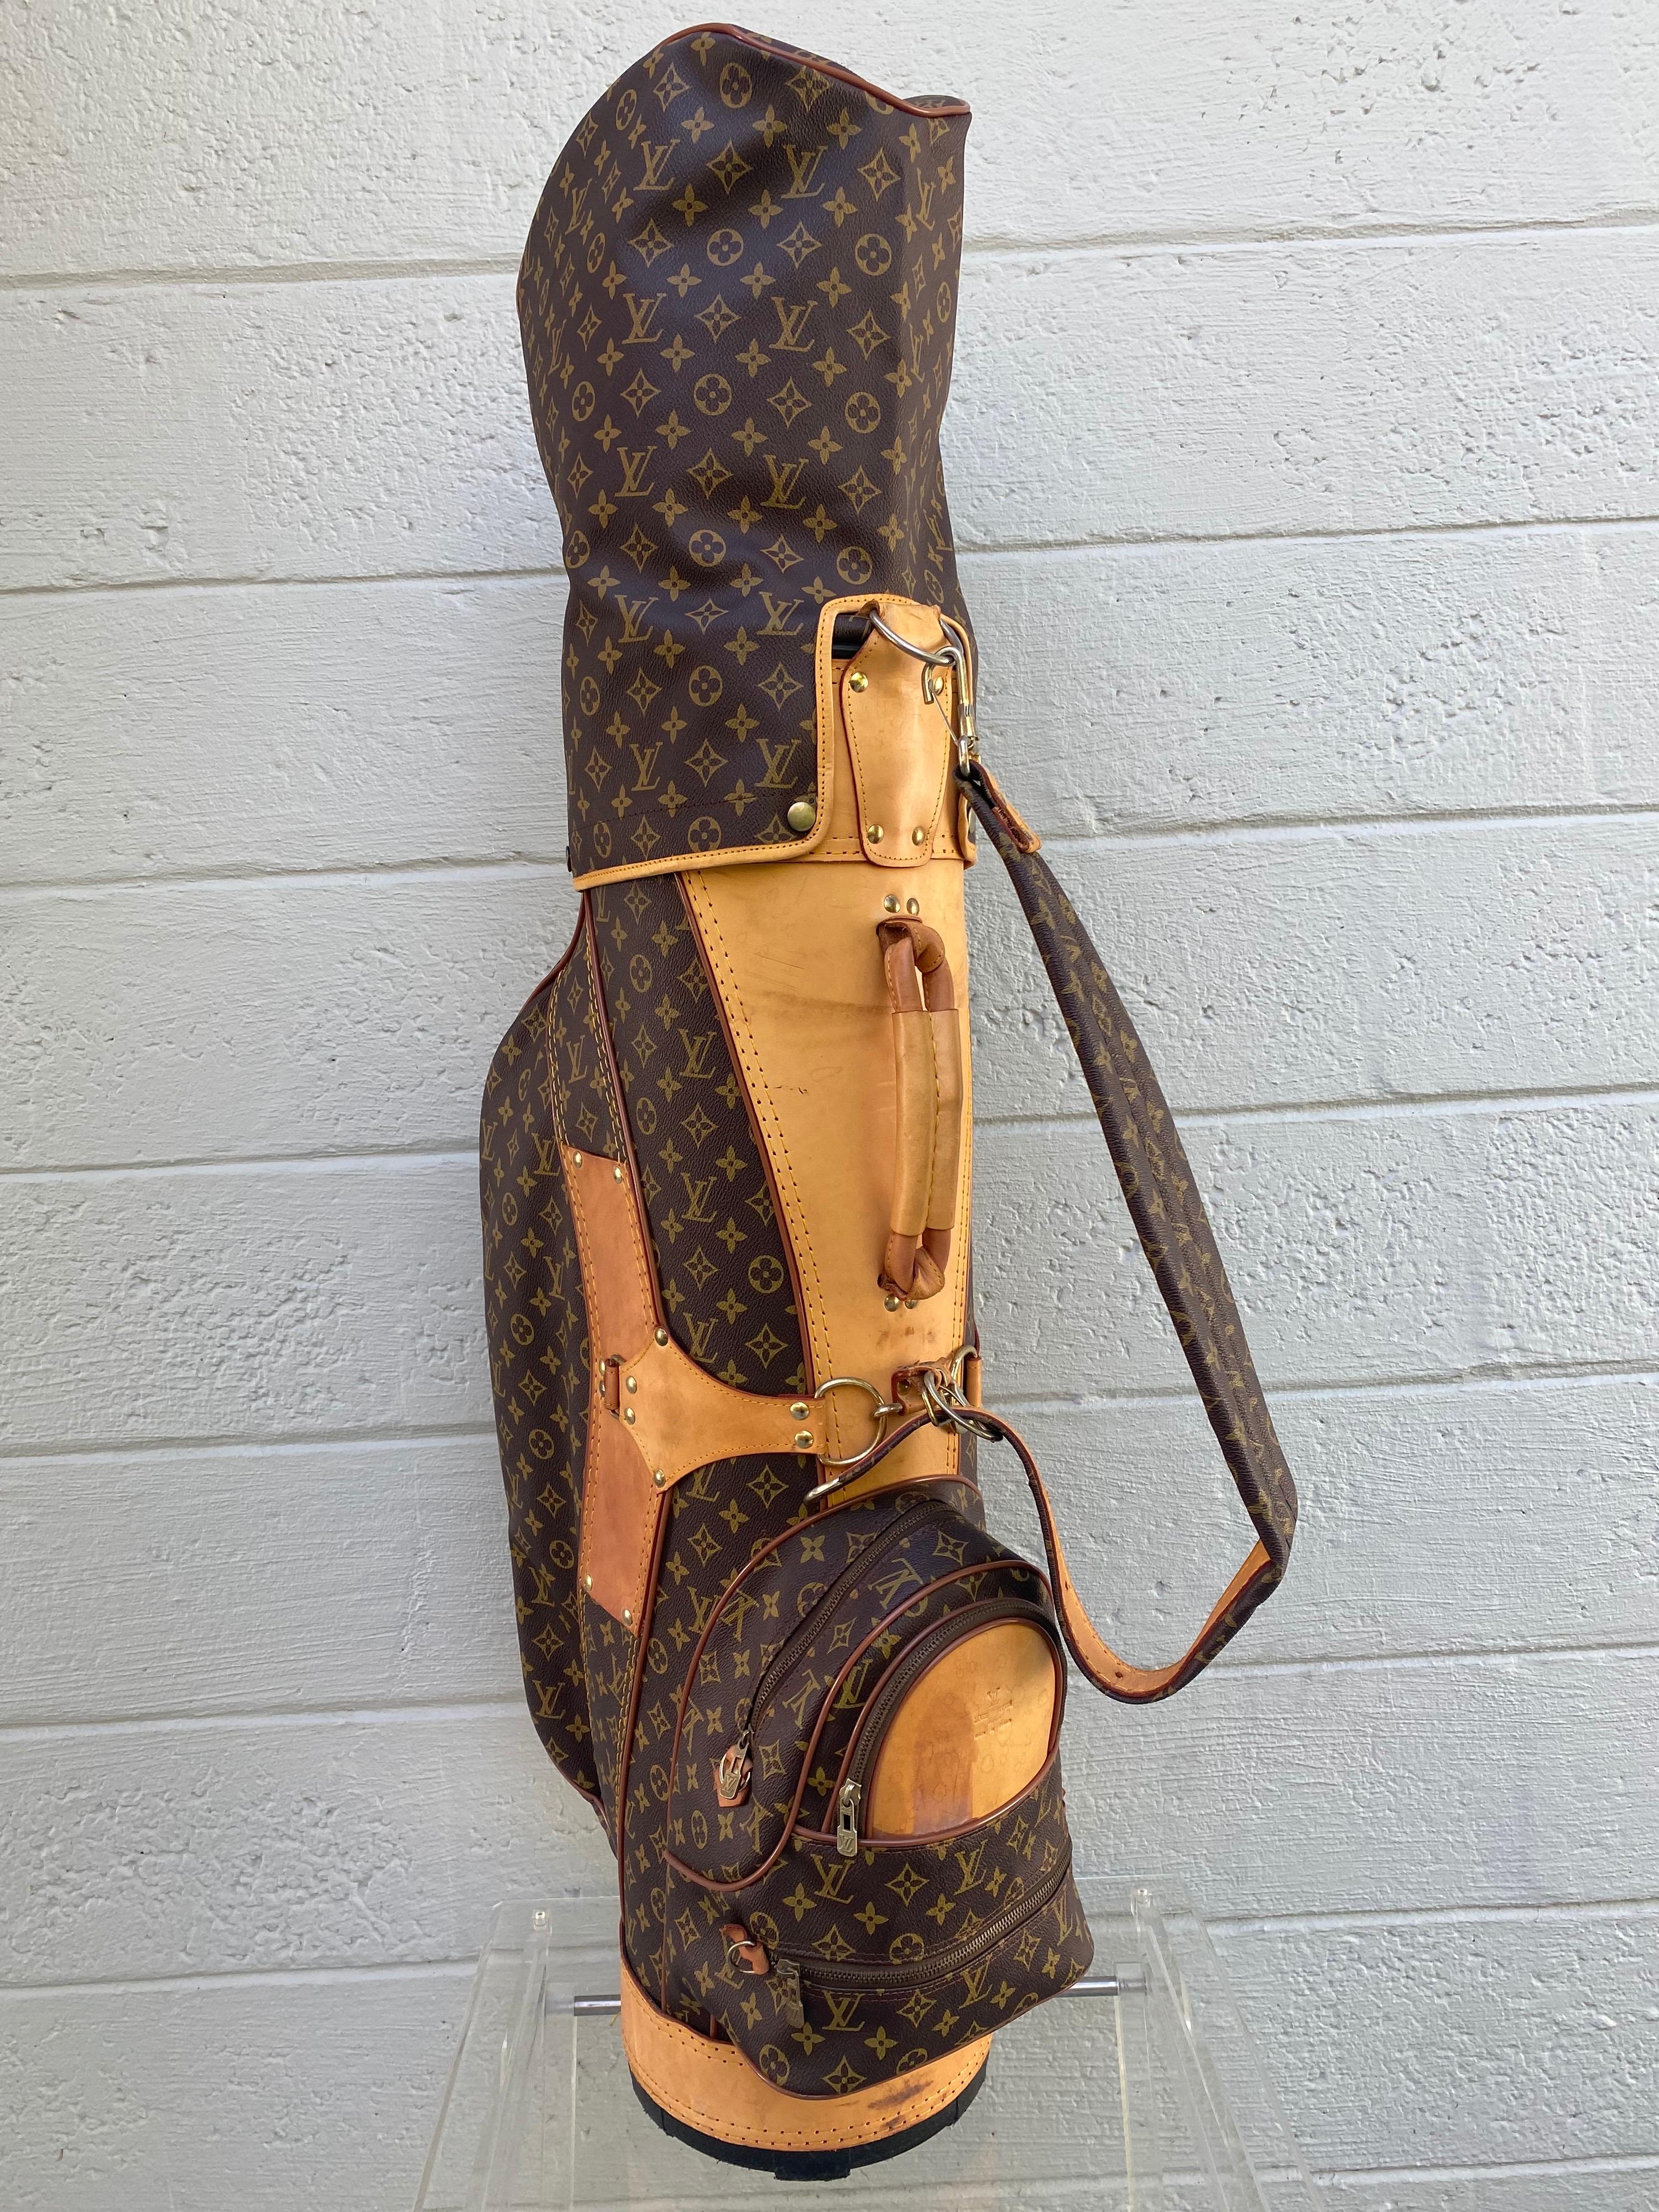 Lv Golf Bag - For Sale on 1stDibs  louis vuitton golf bag, louis vuitton  golf bag new, louis vuitton golf set